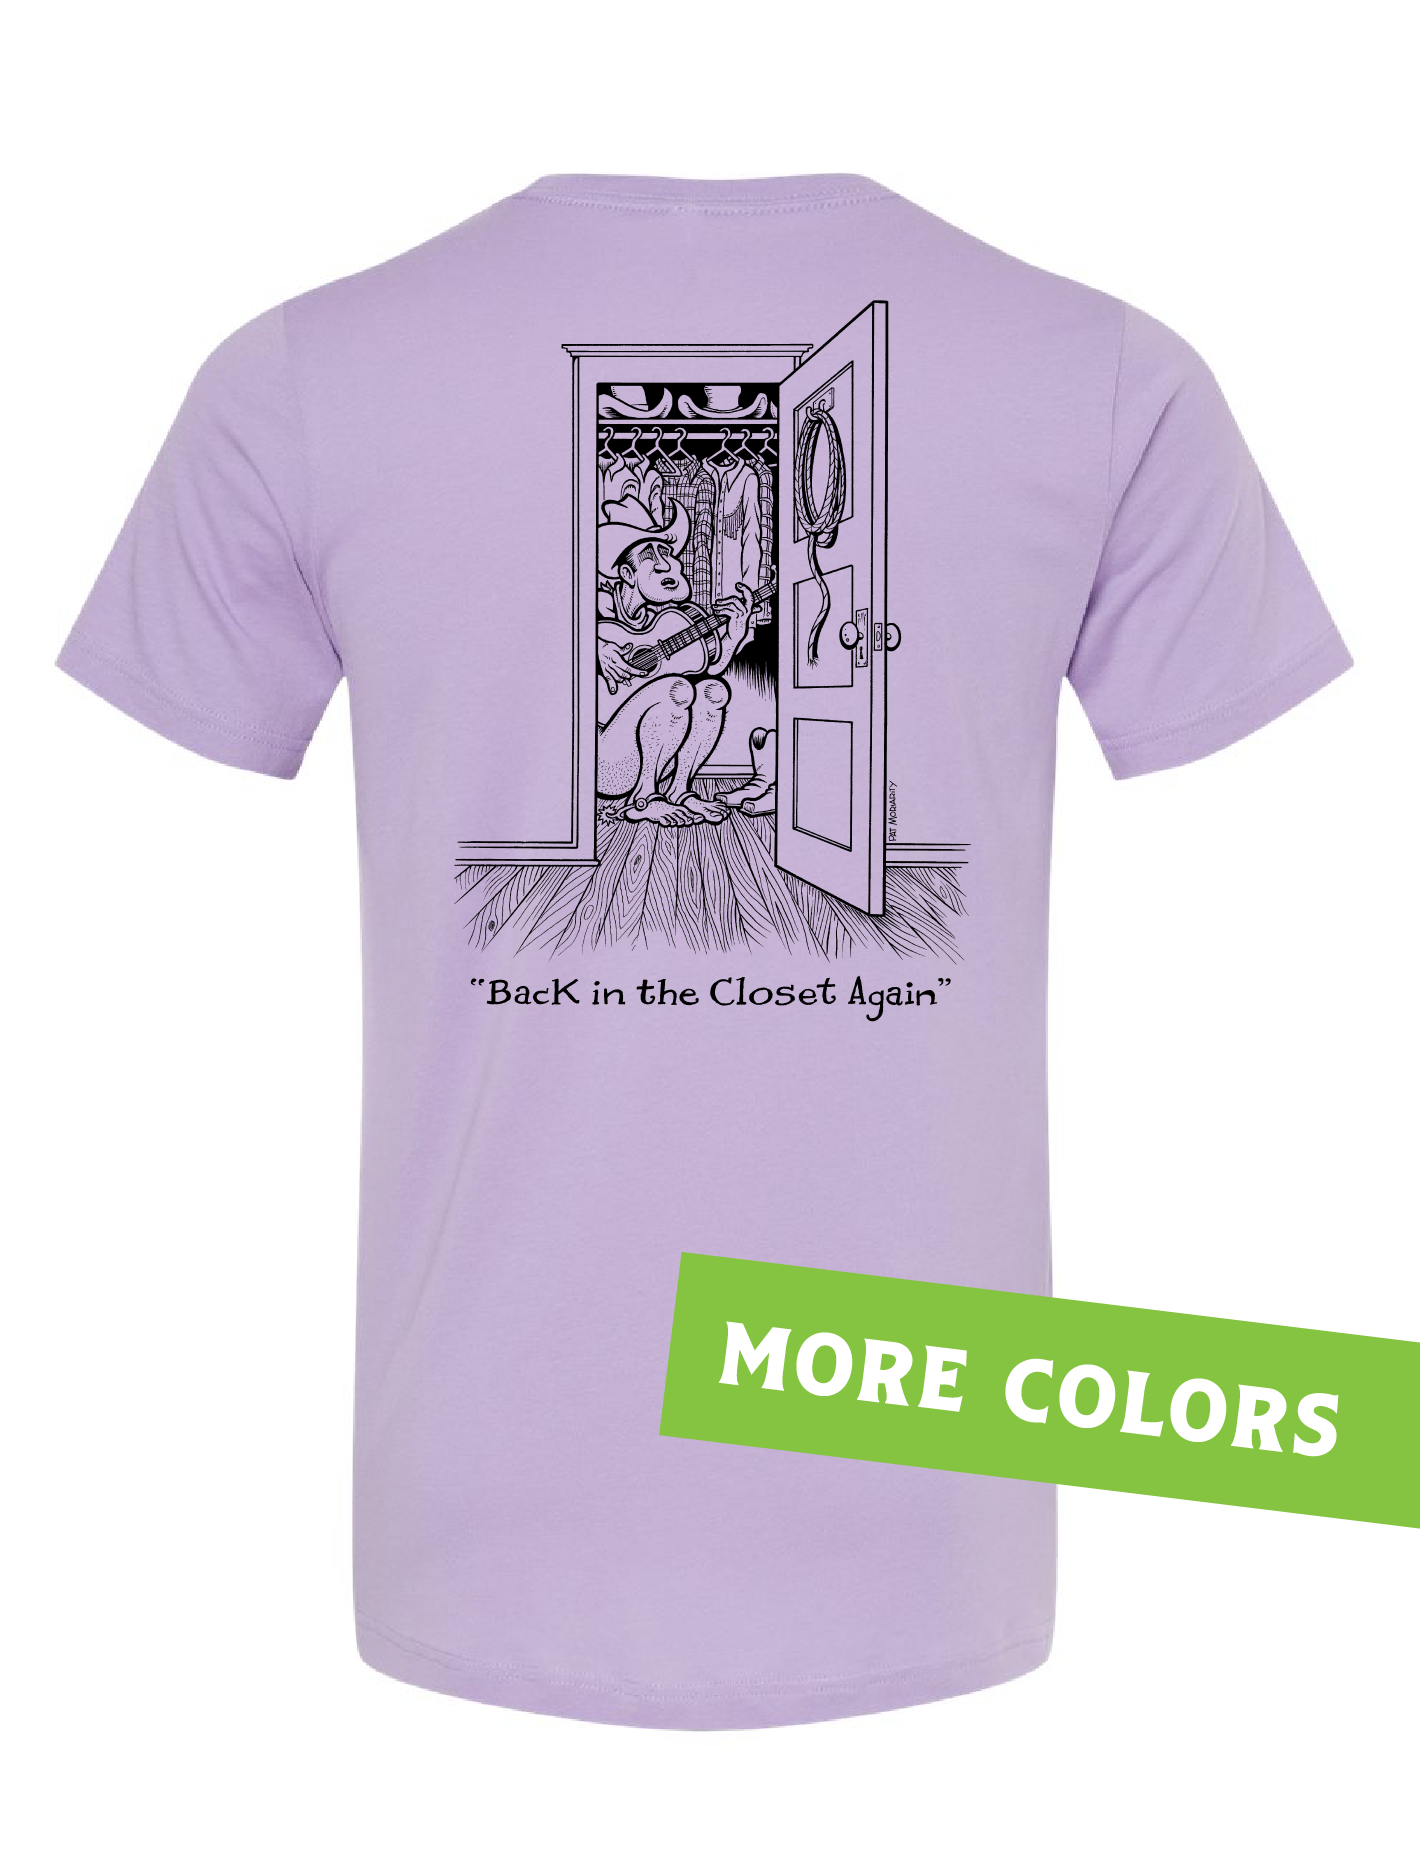 Closet Cowboy · Lavender T-Shirt